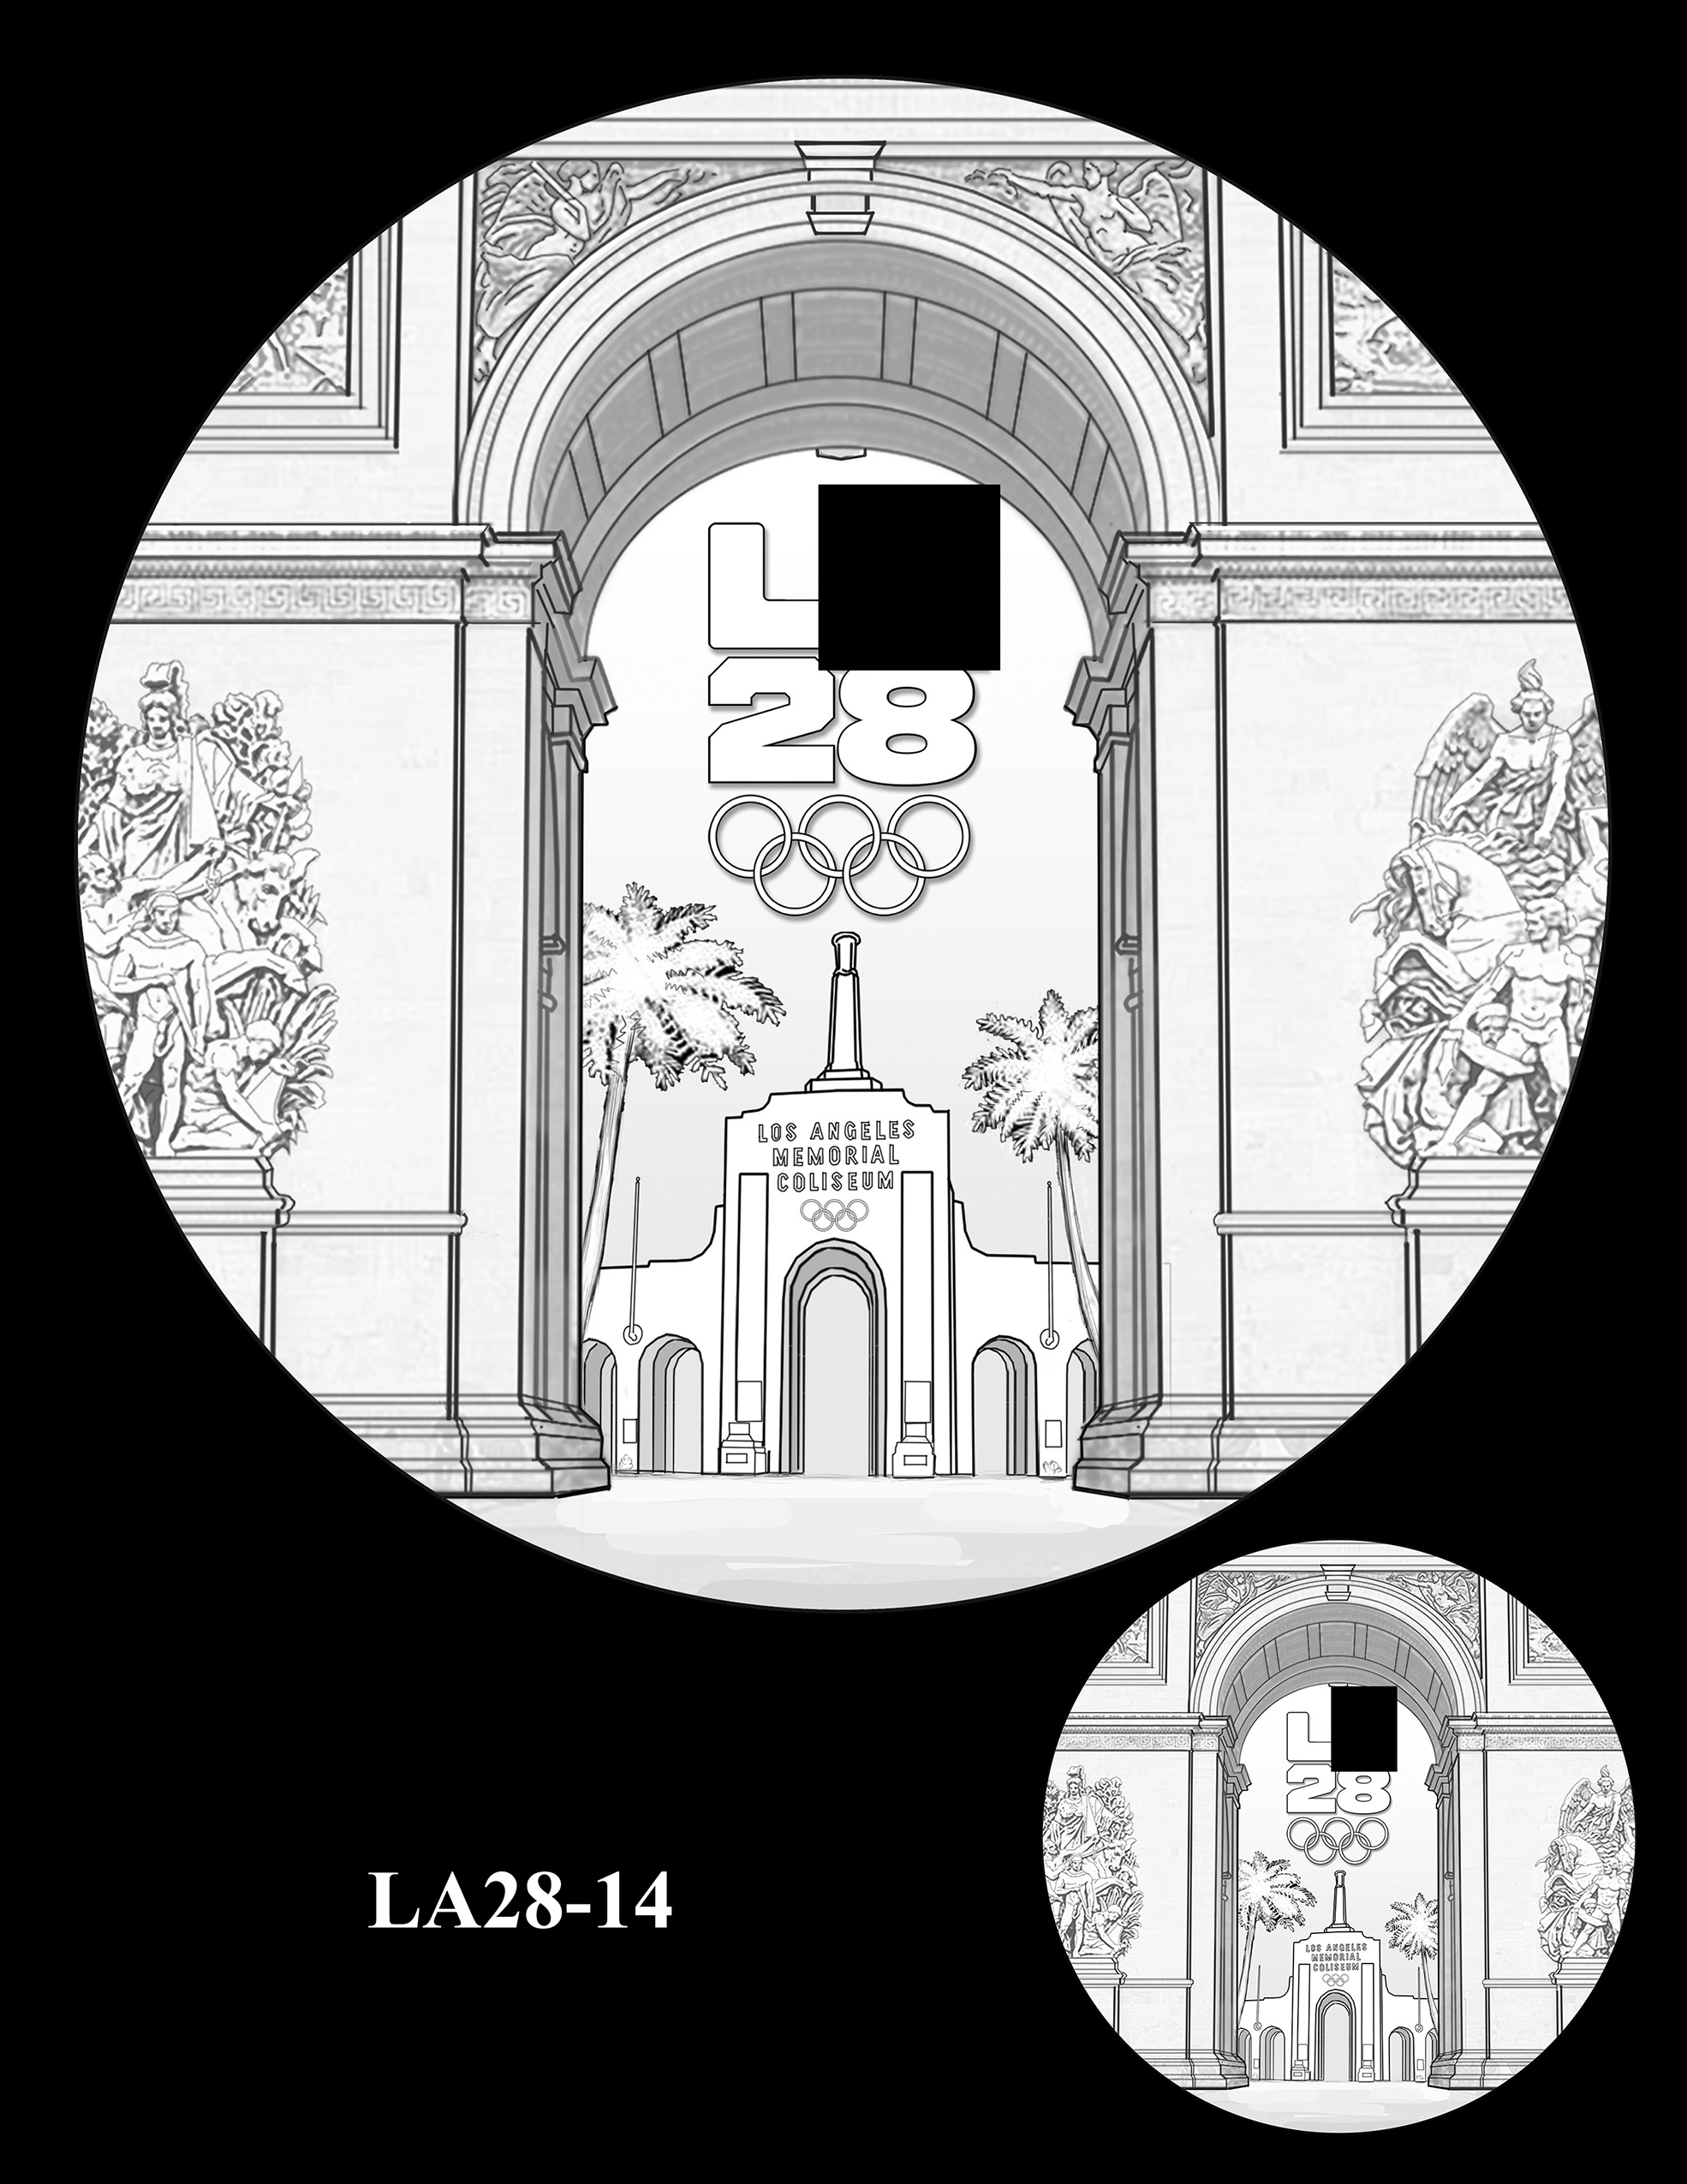 LA28-14 -- Olympics Handover Medallion